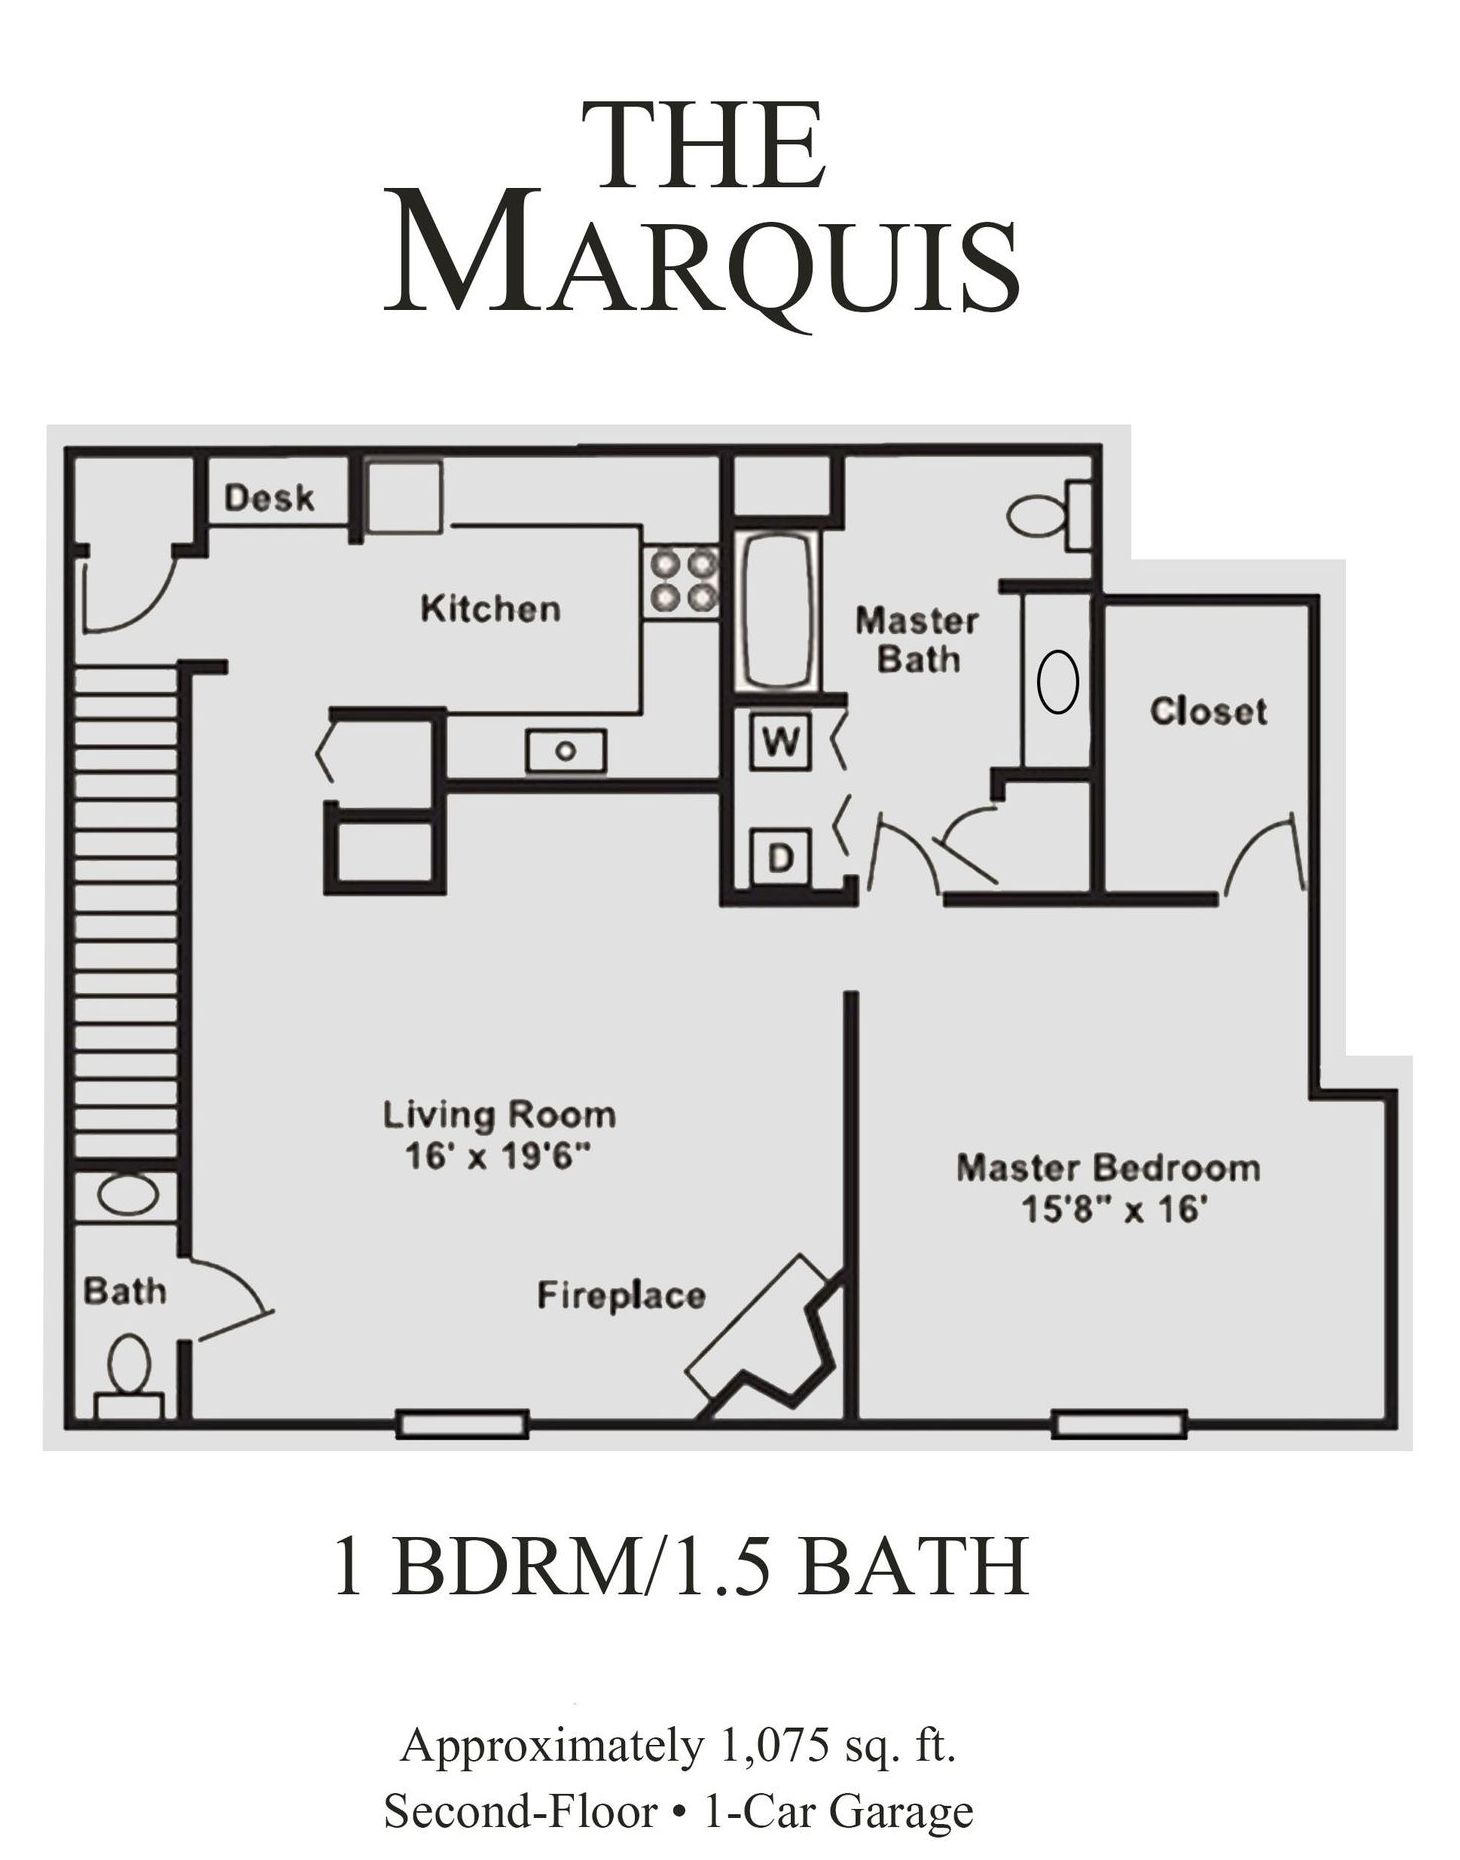 Marquis floor plan drawing